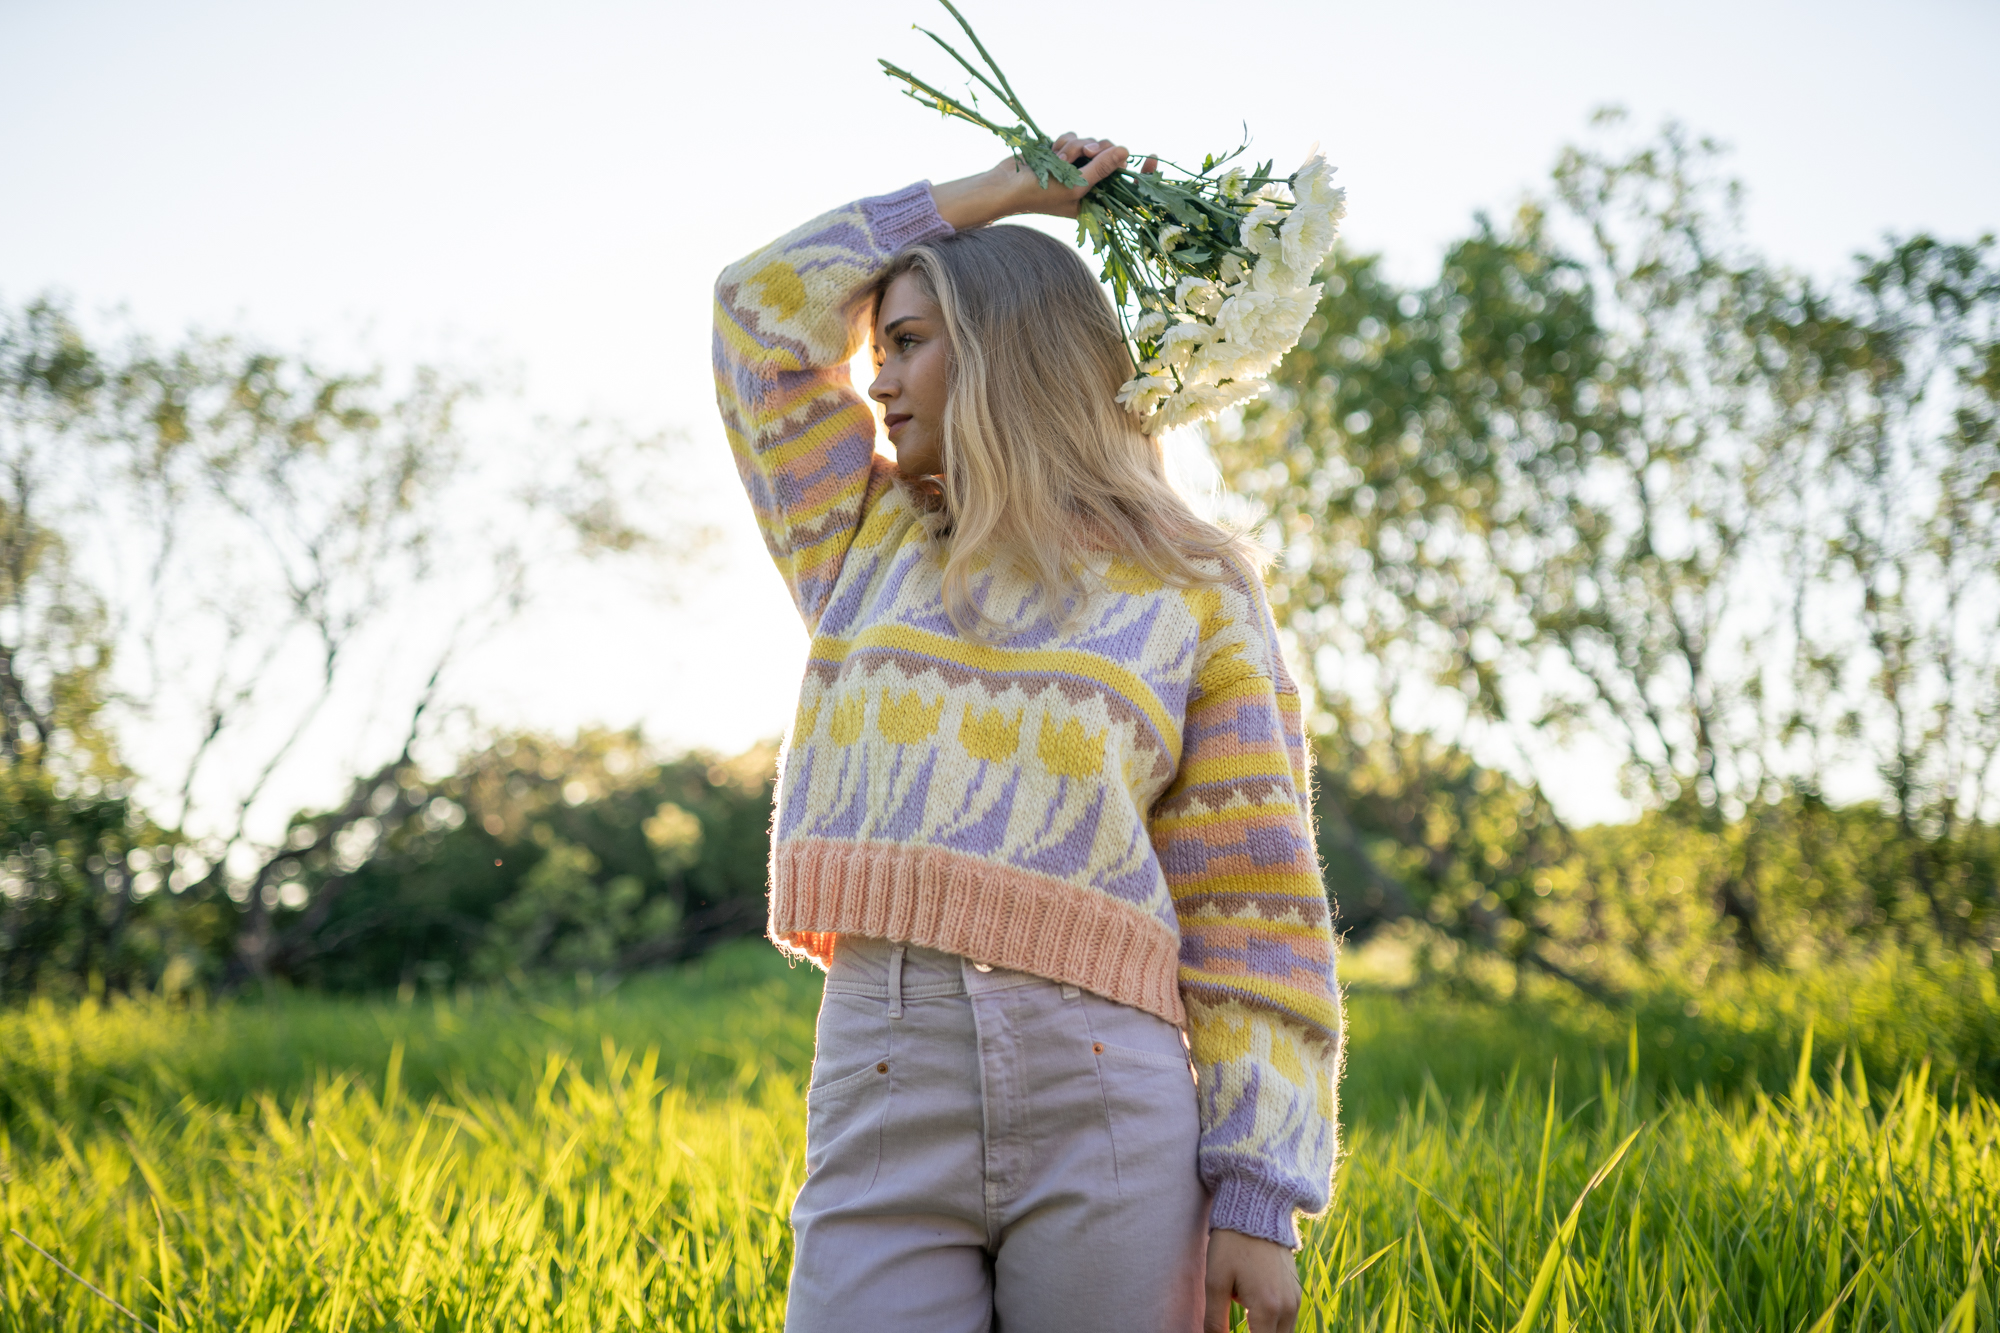  - Tulip sweater | 80s sweater knit | Knitting kit - by HipKnitShop - 09/08/2020